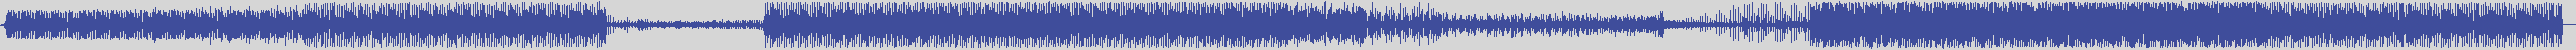 atomic_recordings [AR009] Alex Neri - Housetrack [Paolo Mojo Remix] audio wave form